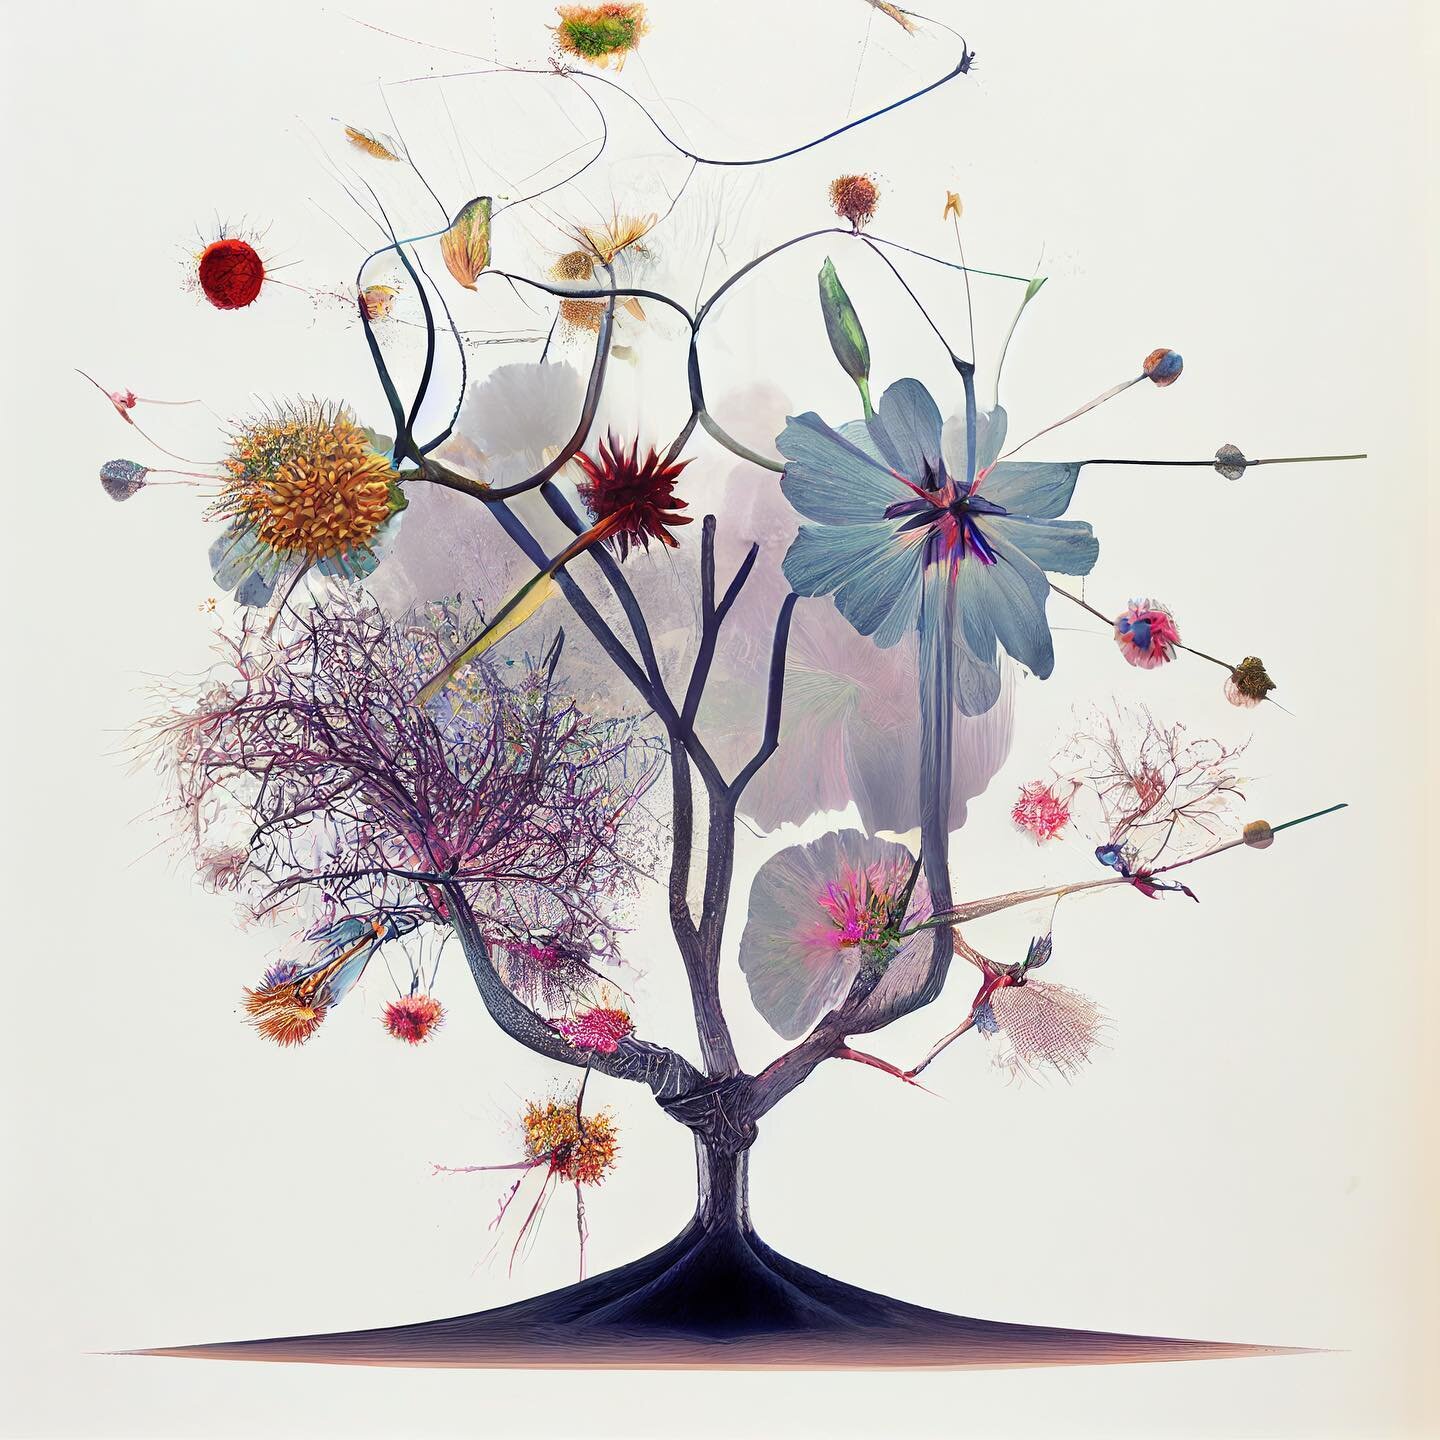 &ldquo;The Tree of Serendipity&rdquo;

#midjourney #digitalart #ai #aiart #datavis #dataviz #dataart #tech #art #artist #collage #인공지능아트 #디지털아트 #flowers #floral #neurofloral